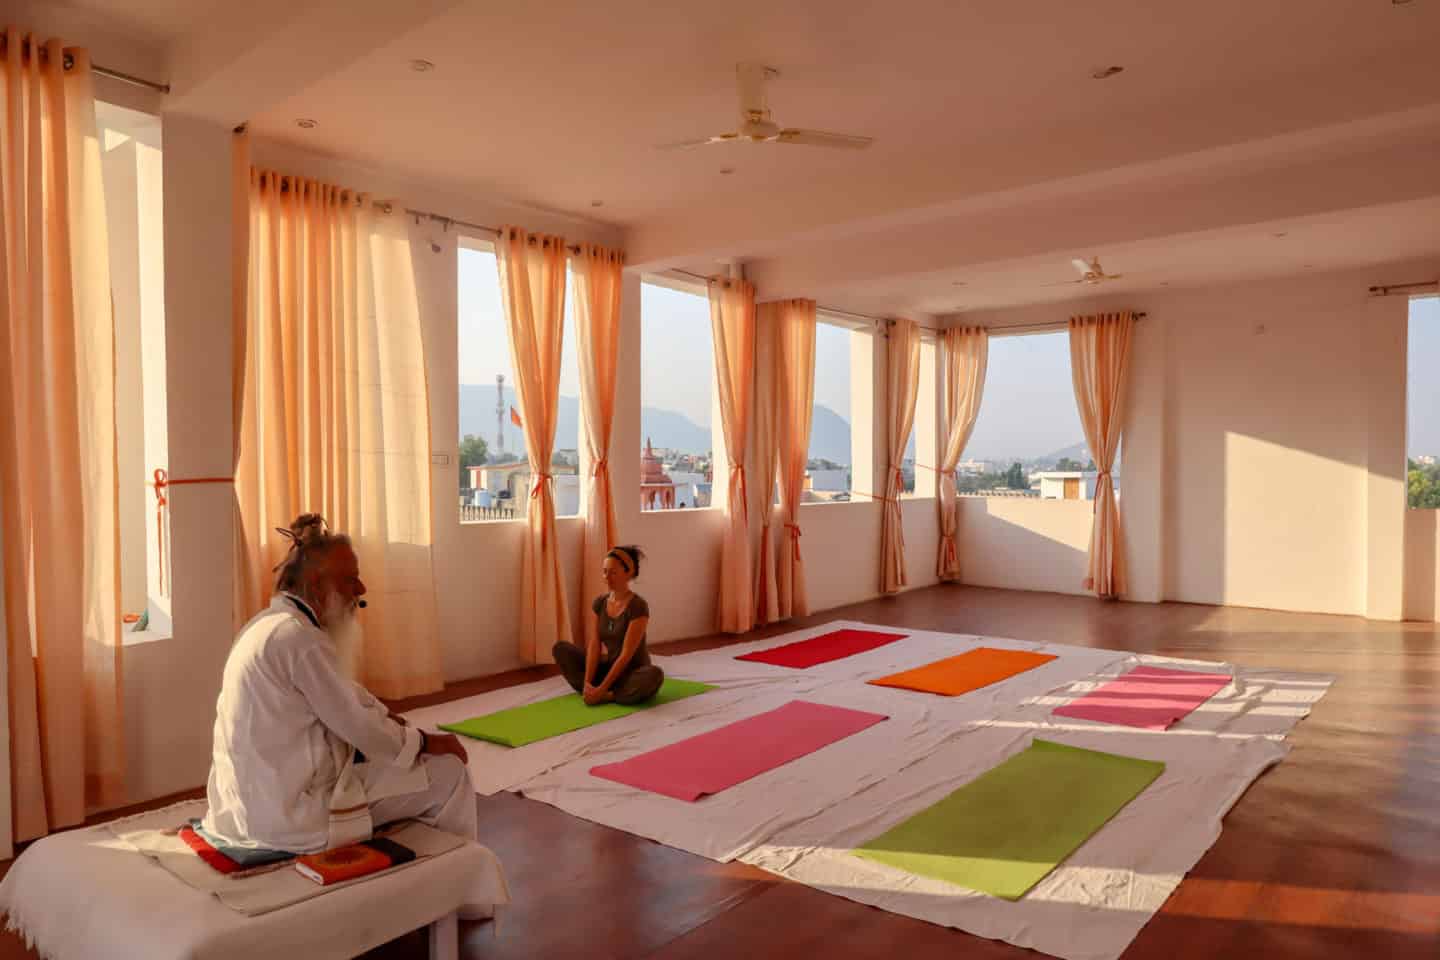 Pushkar Yoga and Meditation Temple